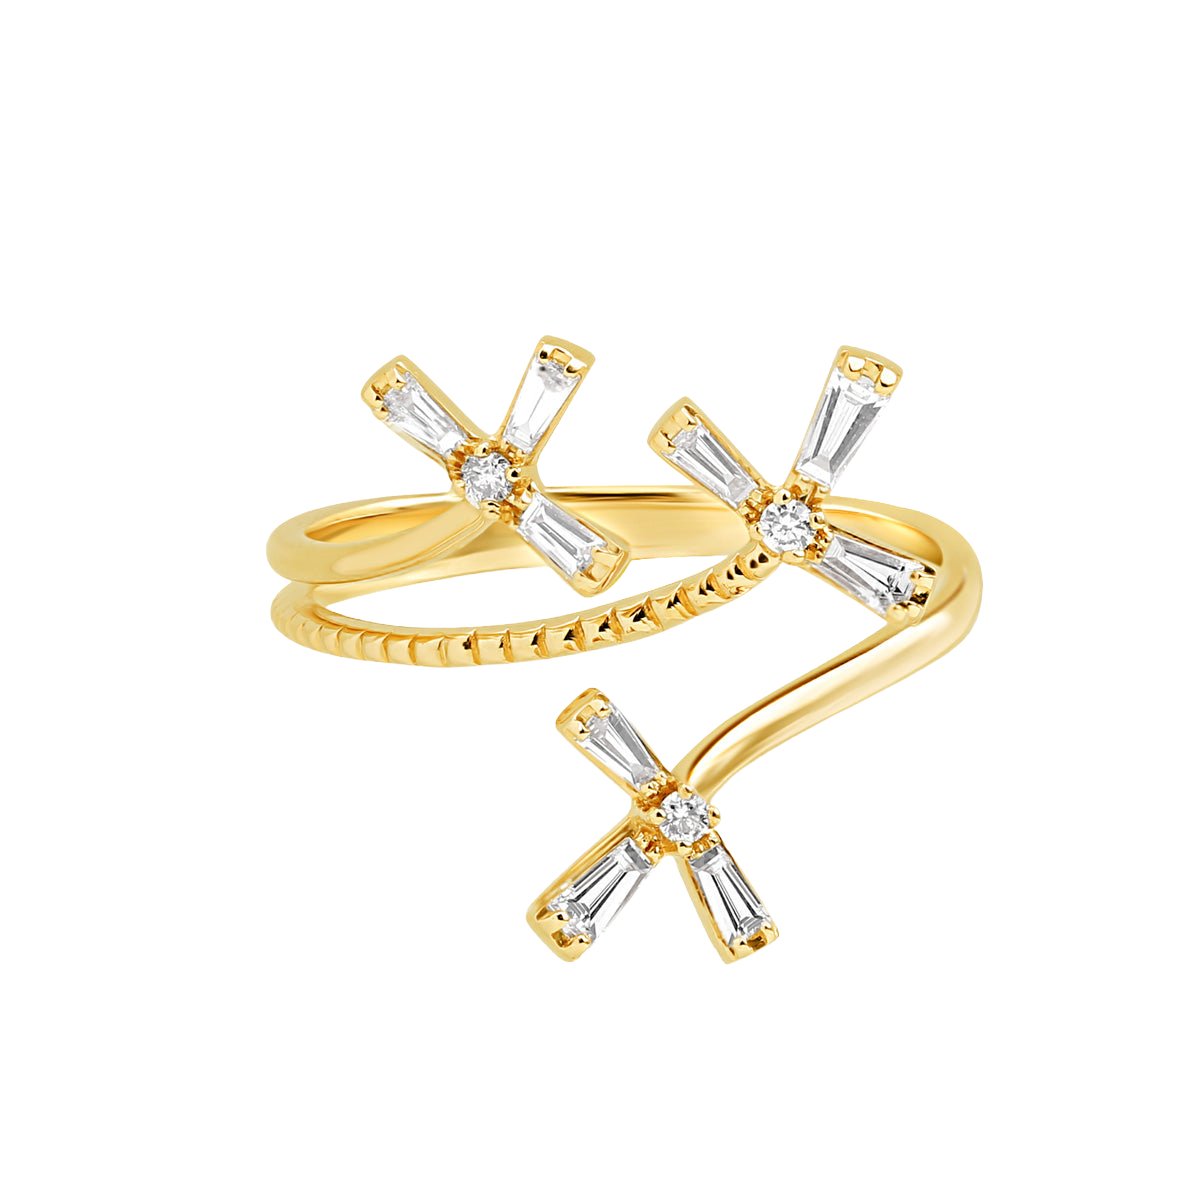 Floral Diamond Wrap Around Ring Rings Estella Collection #product_description# 17515 14k Diamond Flower Jewelry #tag4# #tag5# #tag6# #tag7# #tag8# #tag9# #tag10# 14K Yellow Gold 6